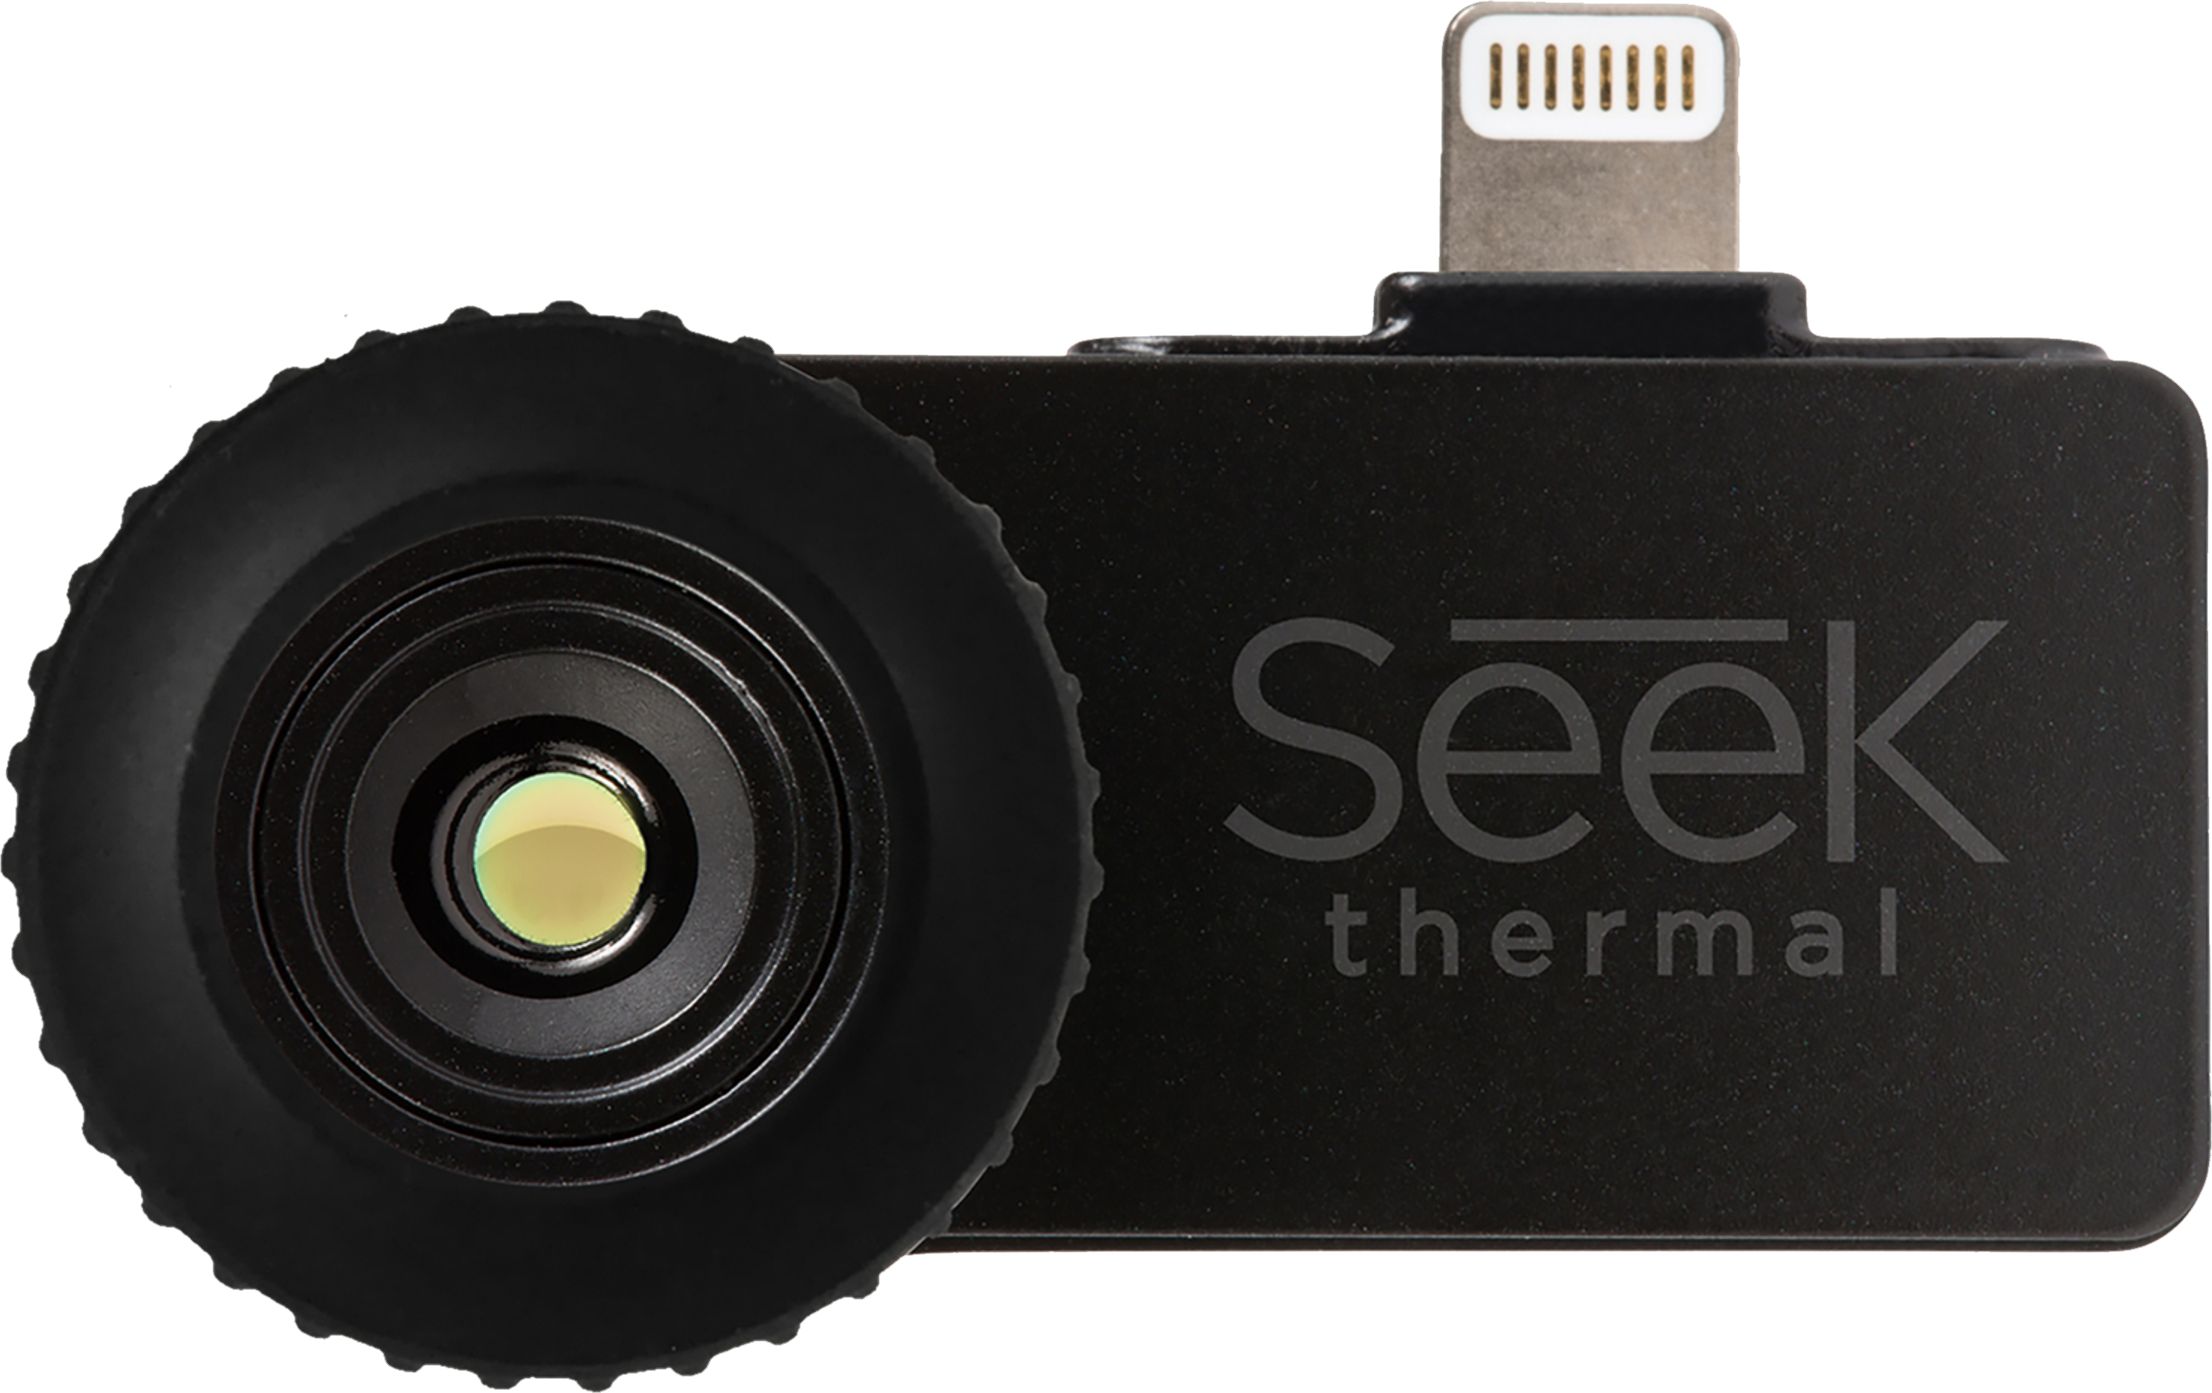 Seek Thermal Thermal Imaging Camera for Ligthning Video Kameras